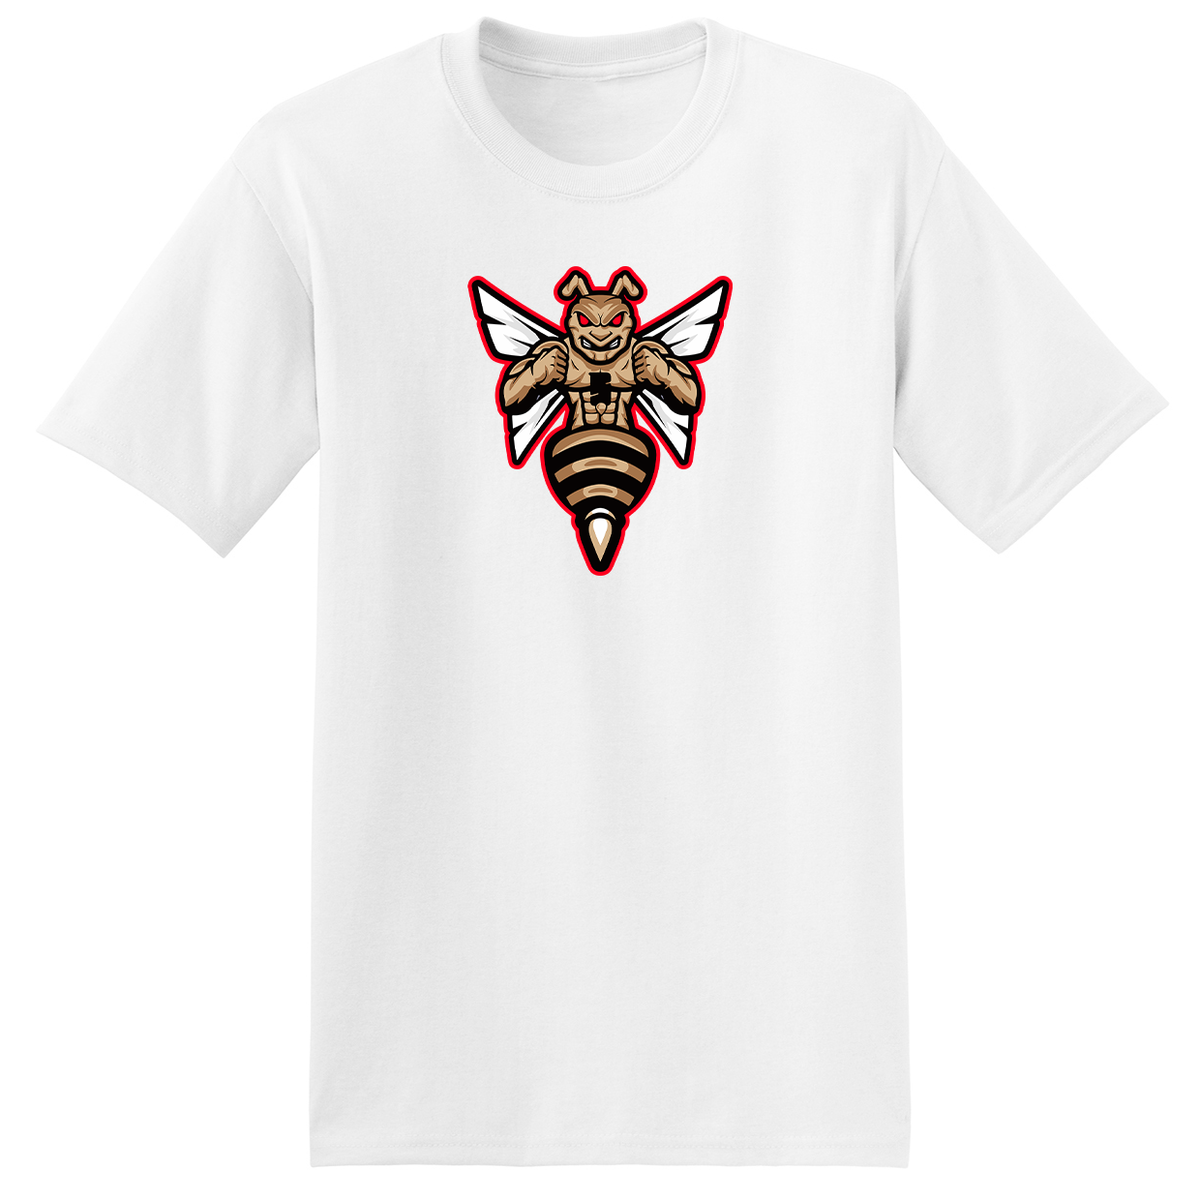 Houston Stingers Baseball Club T-Shirt